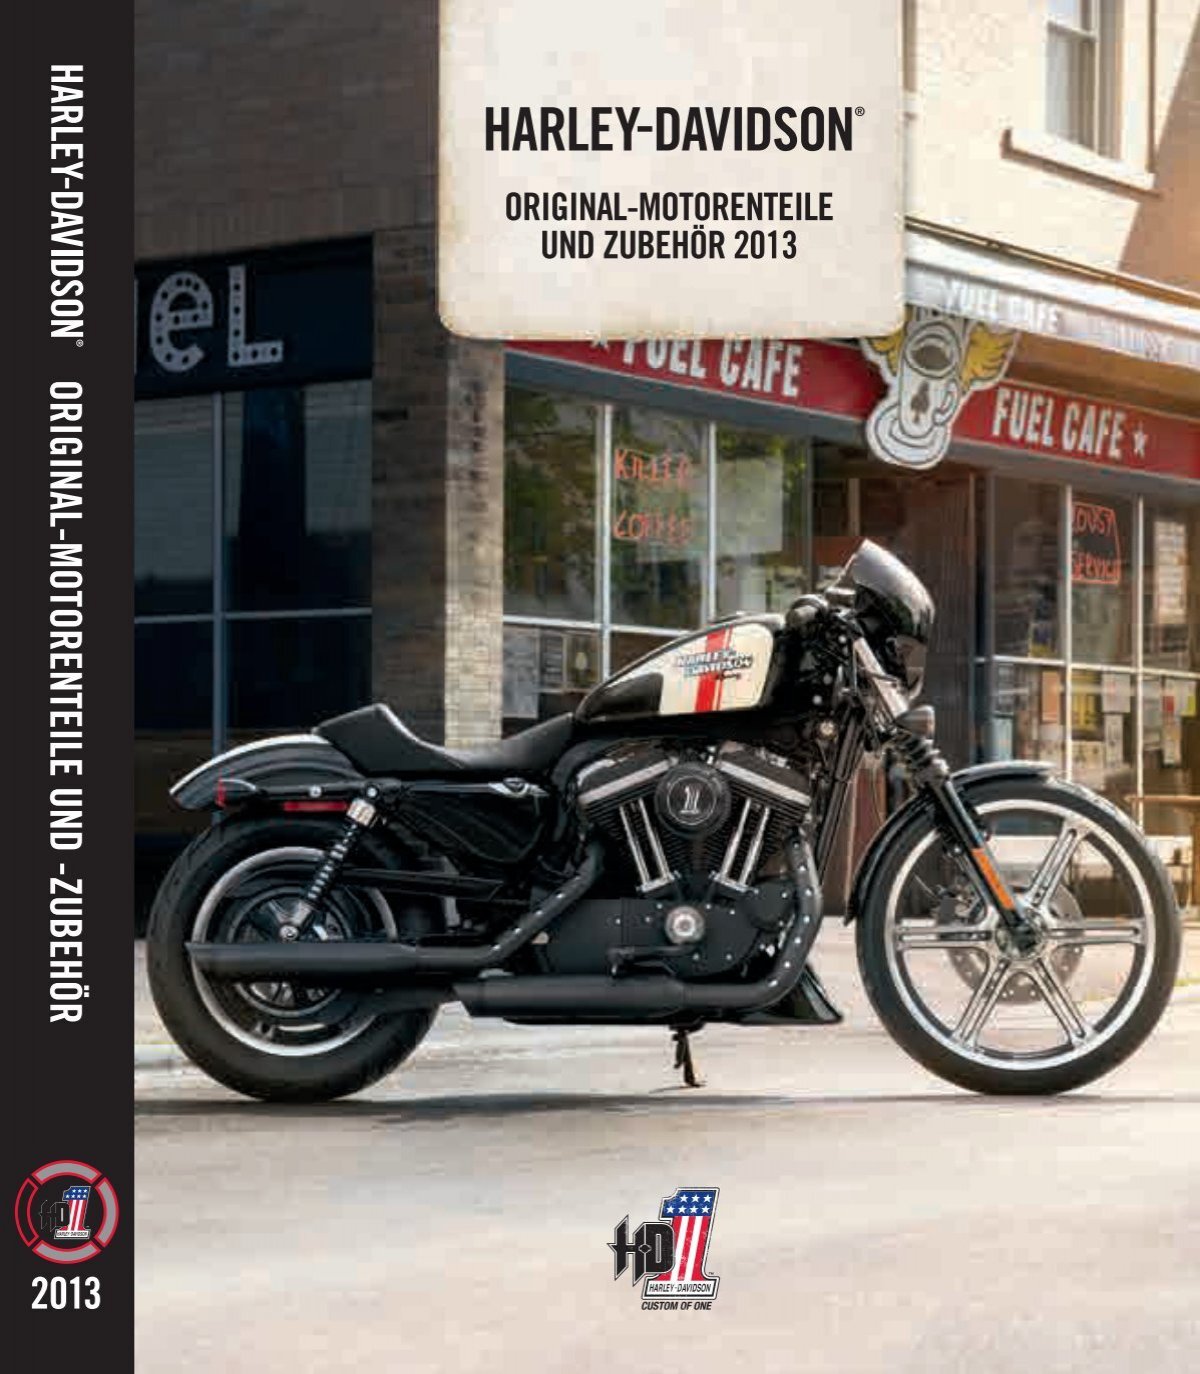 HARLEY-DAVIDSONÂ® - Harley Davidson Shop